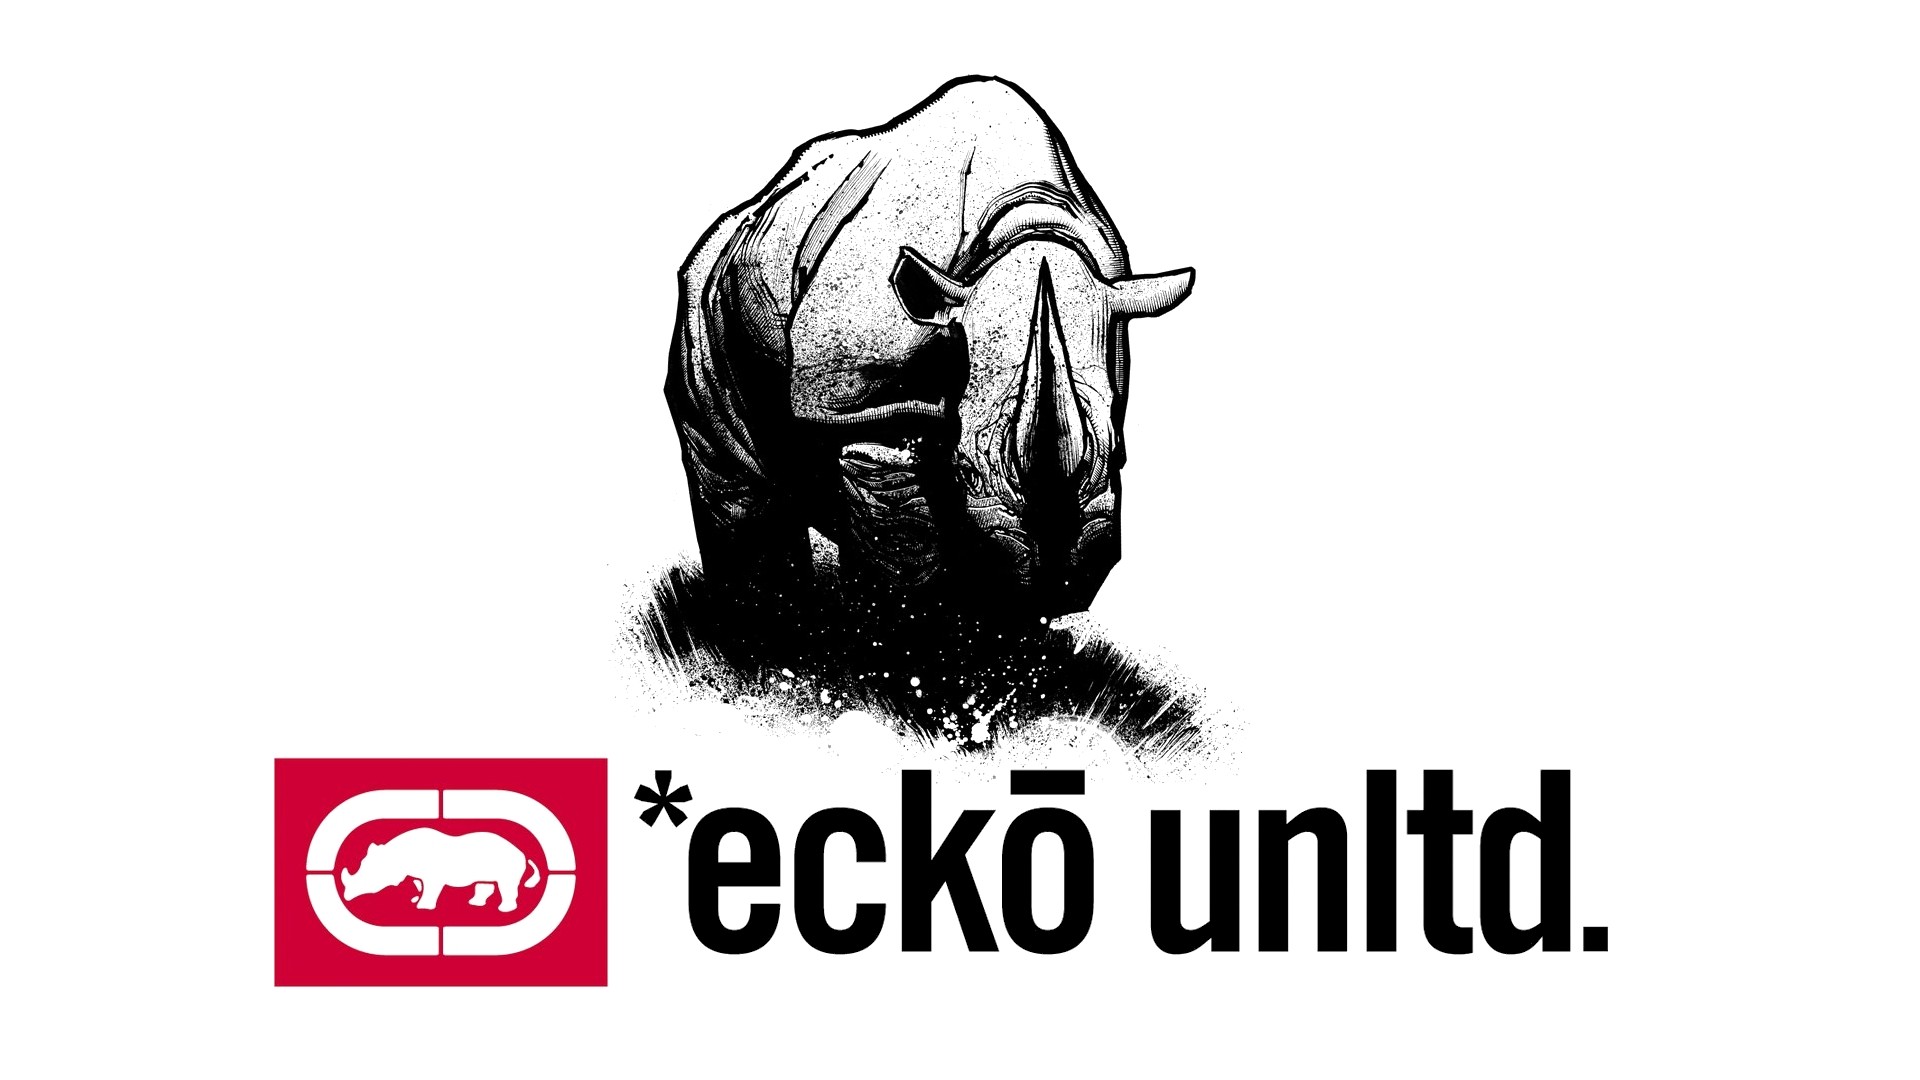 General 1920x1080 ecko rhino white background brand digital art simple background